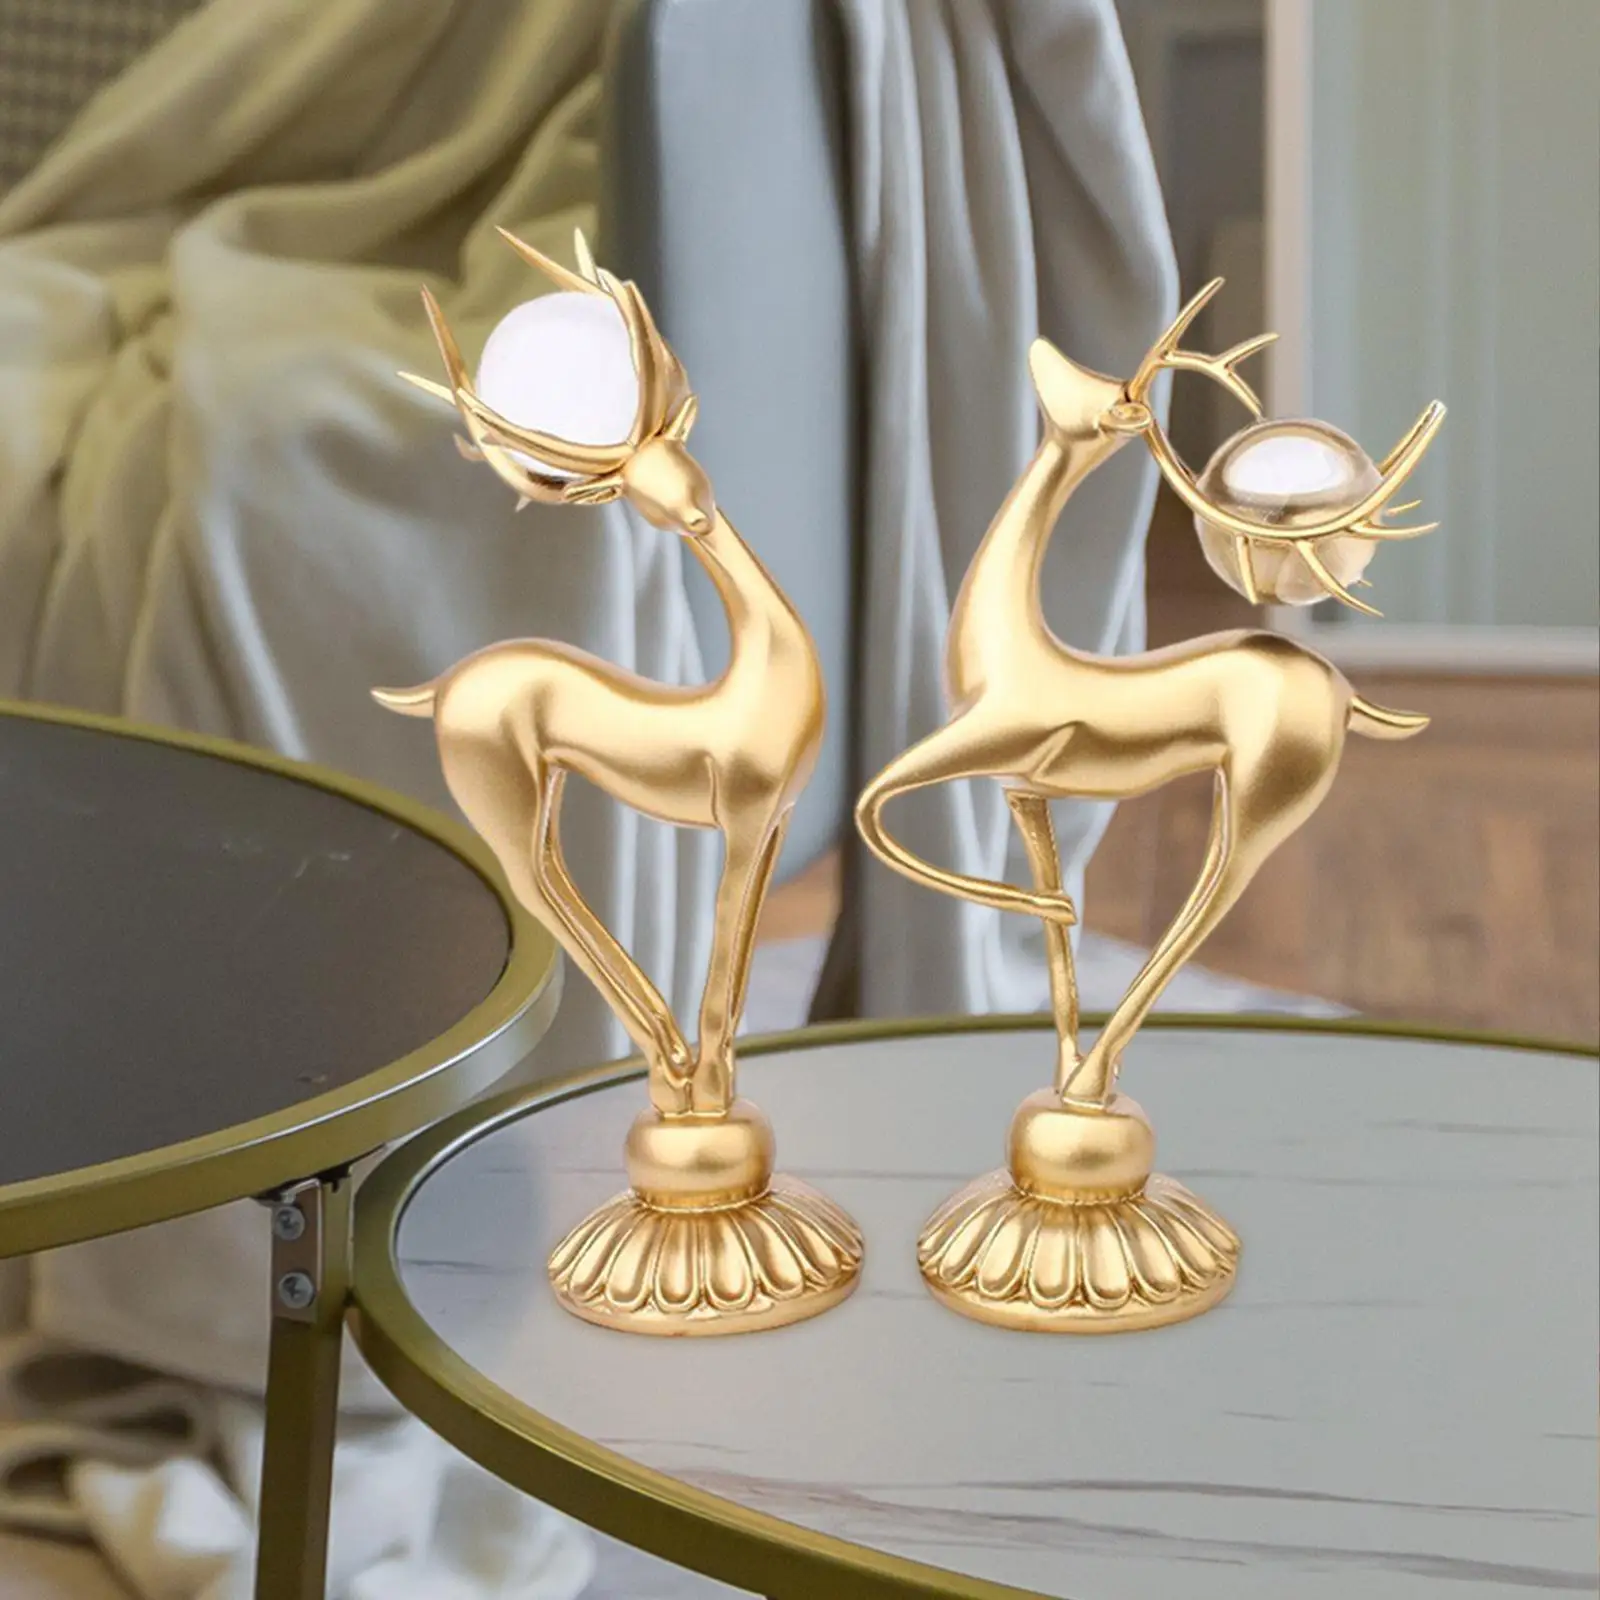 

2x Modern Deer Figurines Reindeer Sculptures Artworks Couple Elk Resin Statues for Bedroom Wedding Farmhouse Office New Year